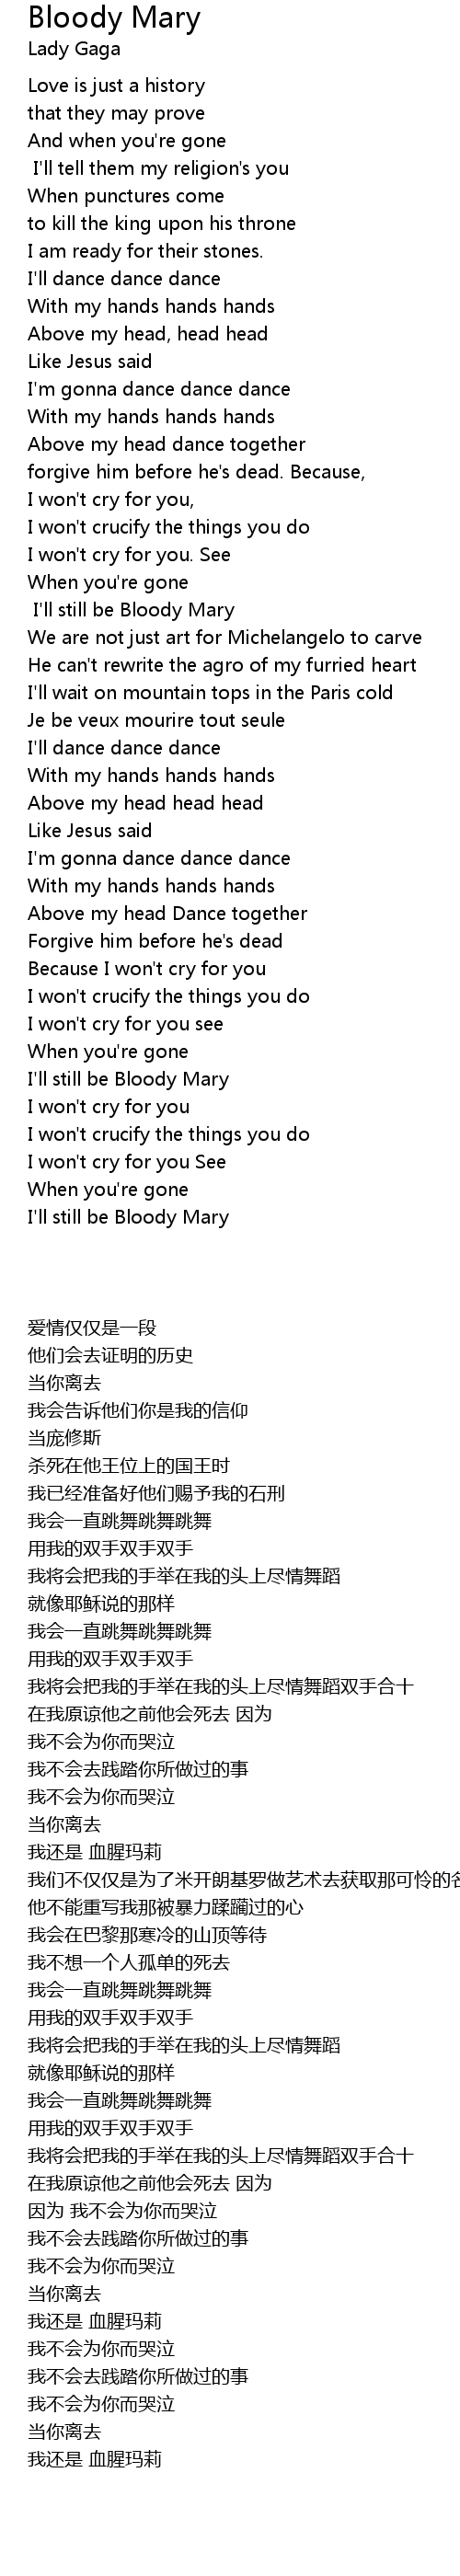 bloodymary #song #lyrics, song with lyrics